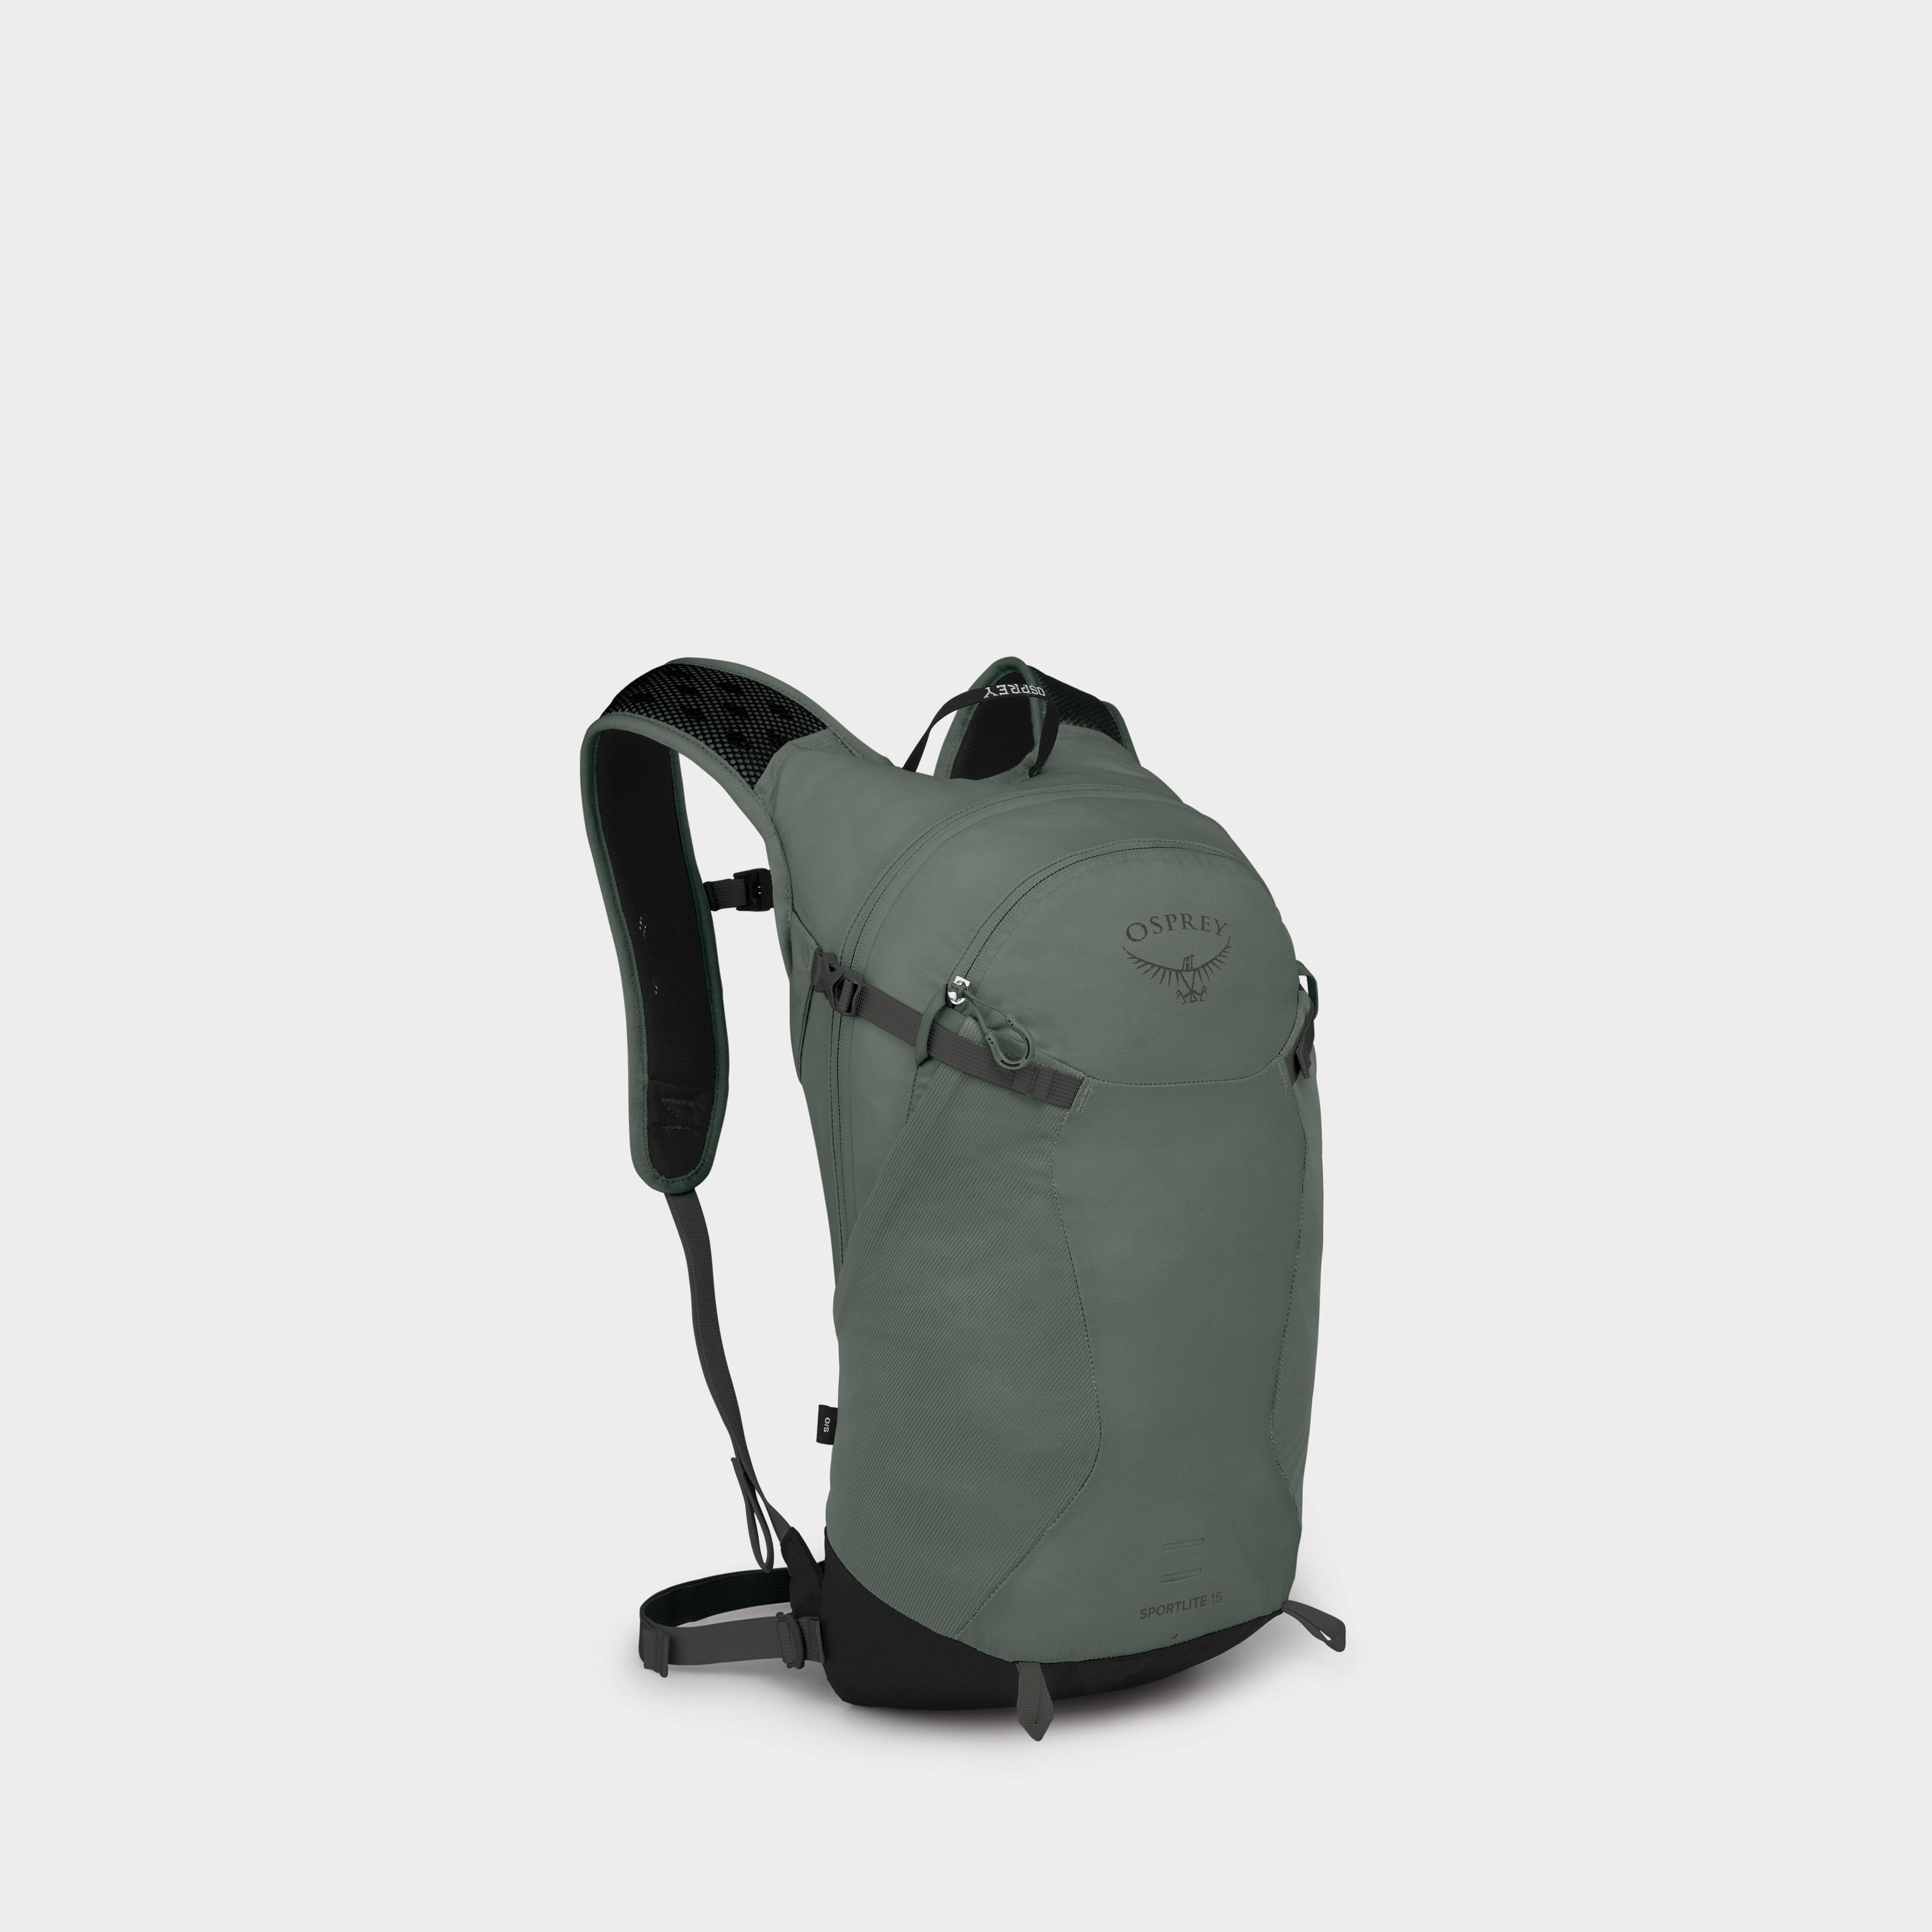 Osprey Sportlite 15 Hiking Backpack - Green/grn  Green/grn